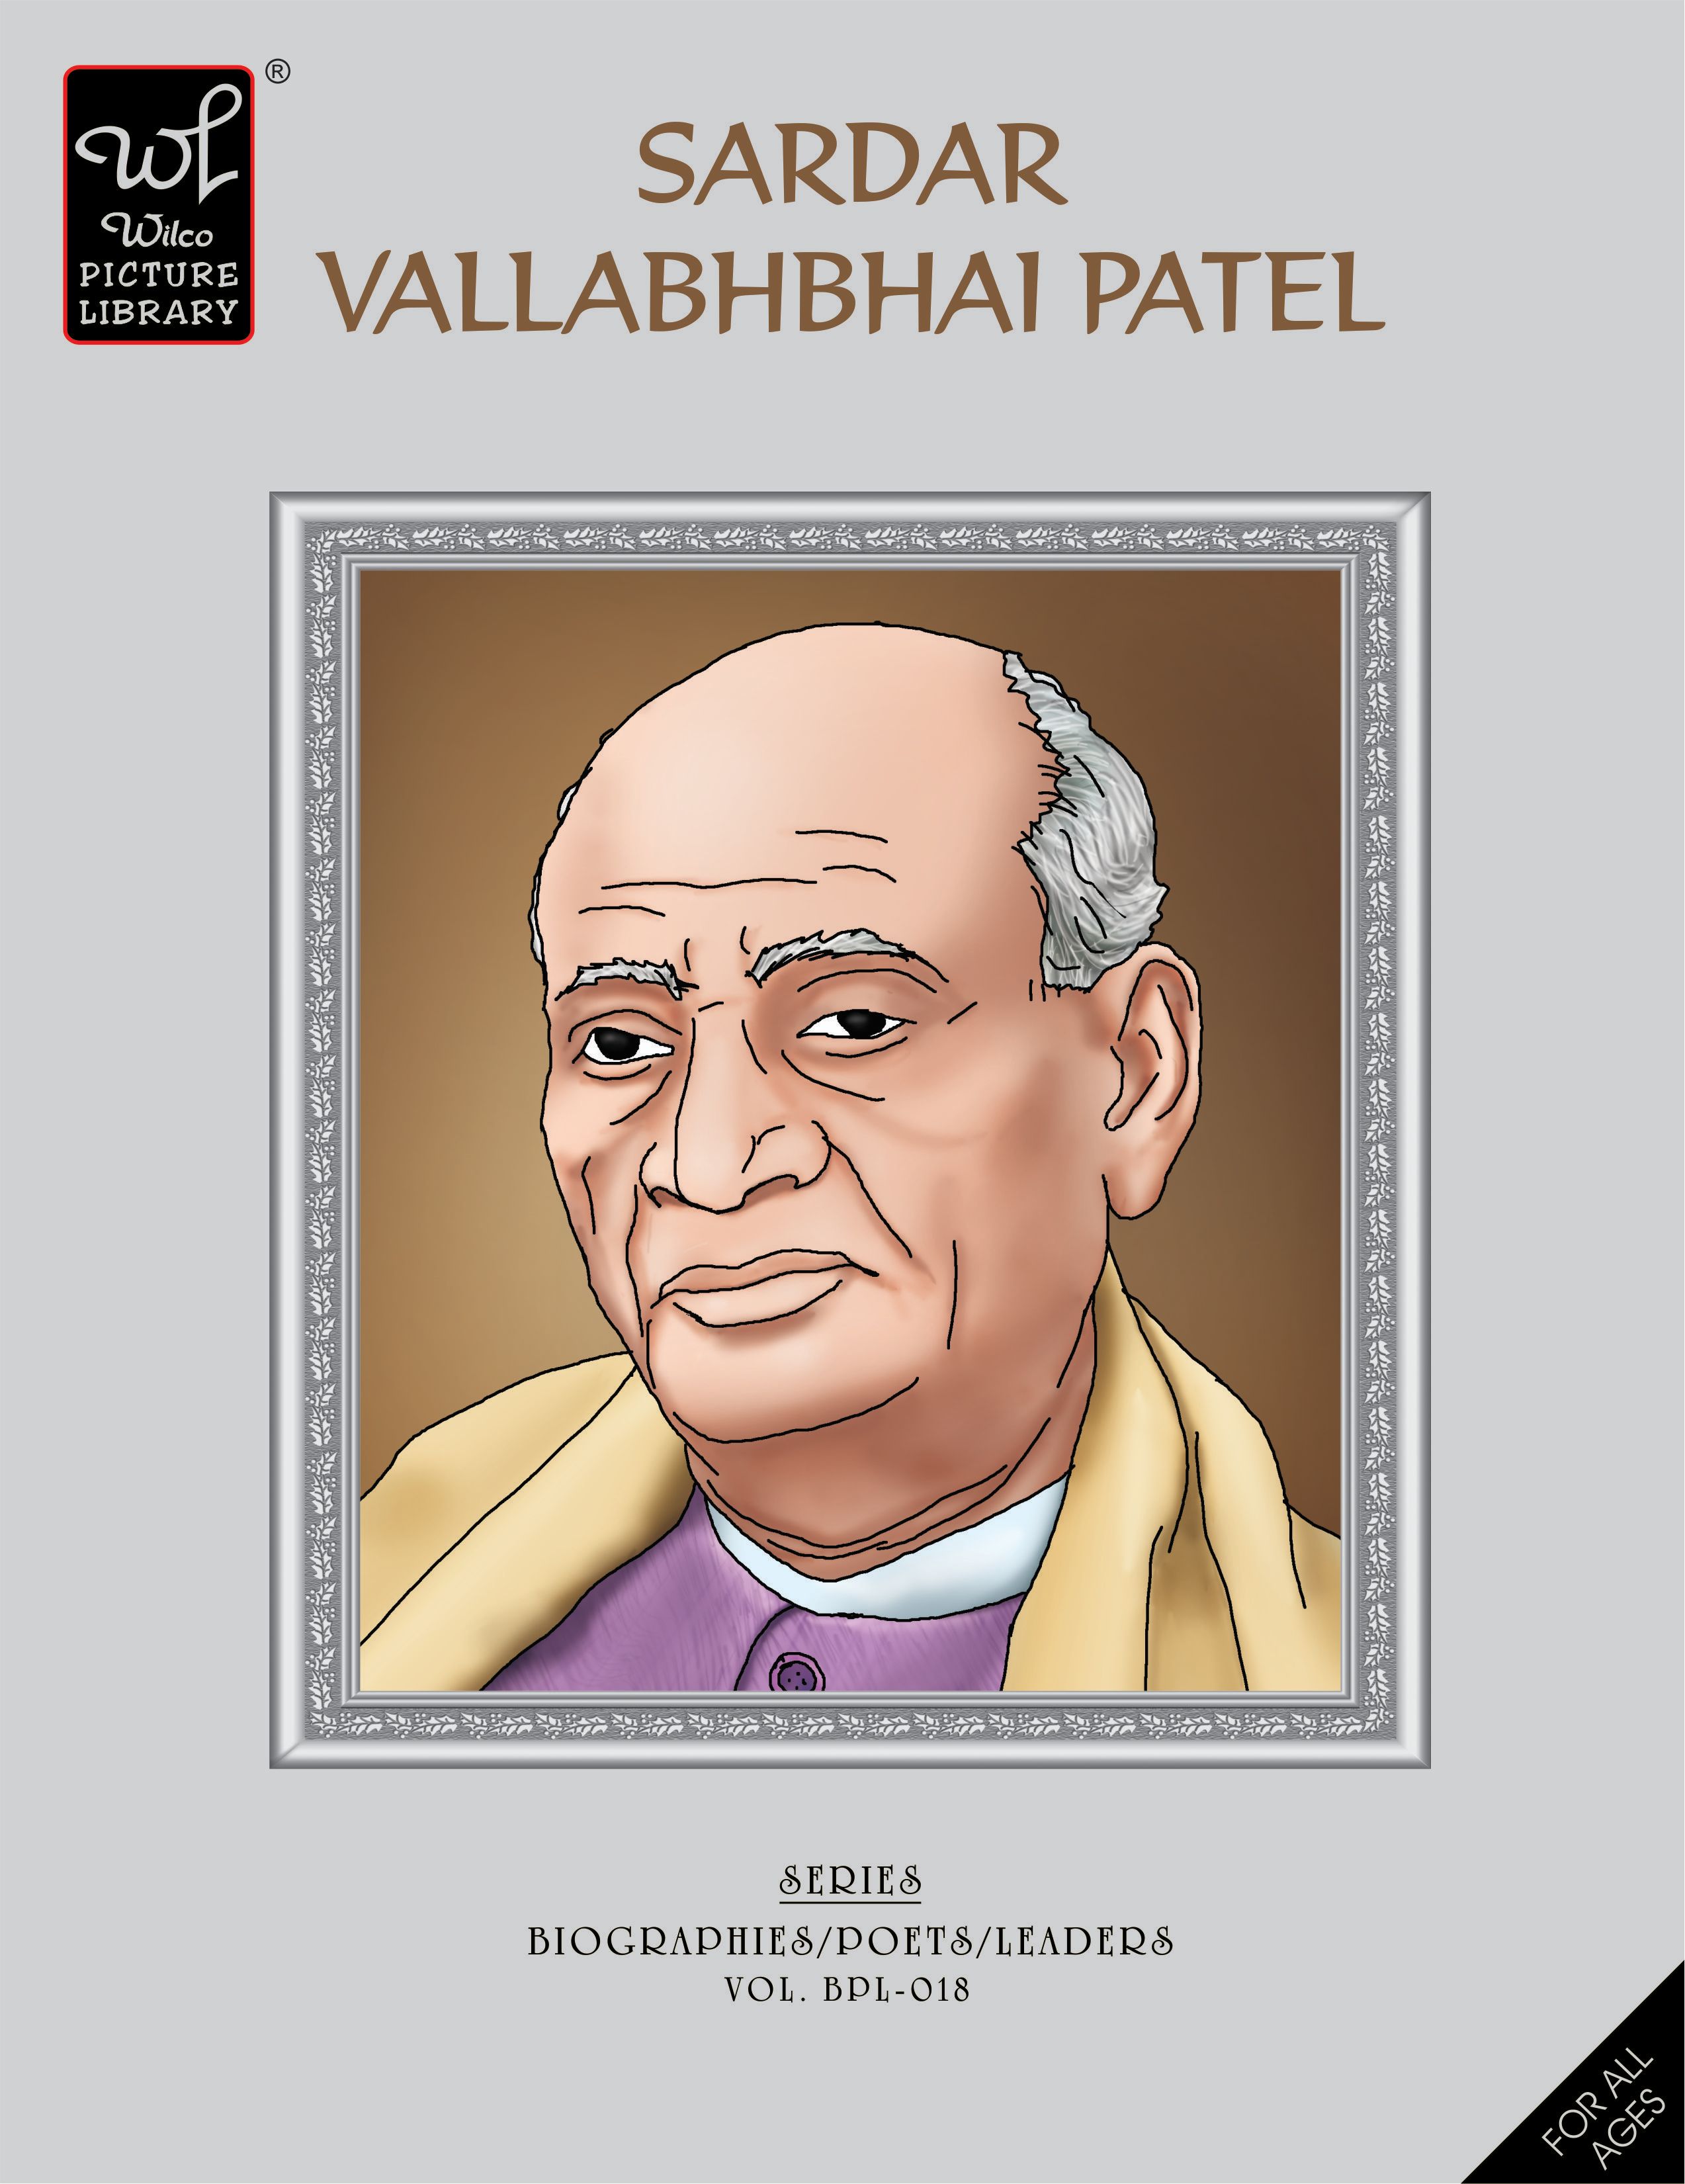 WPL:Sardar Vallabhbhai Patel